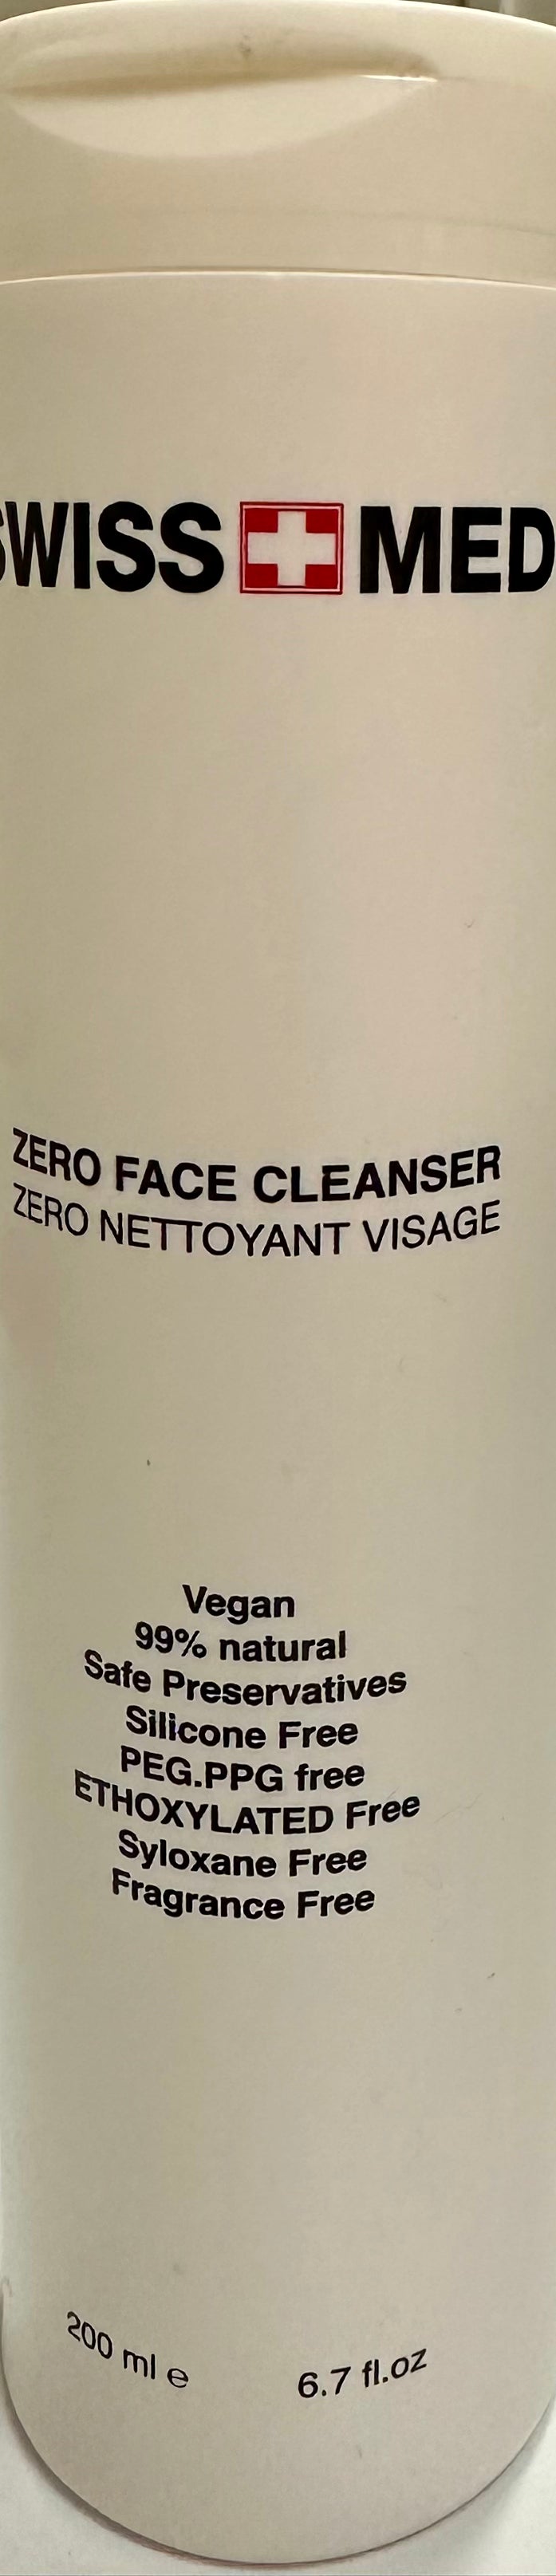 Zero Face Cleanser